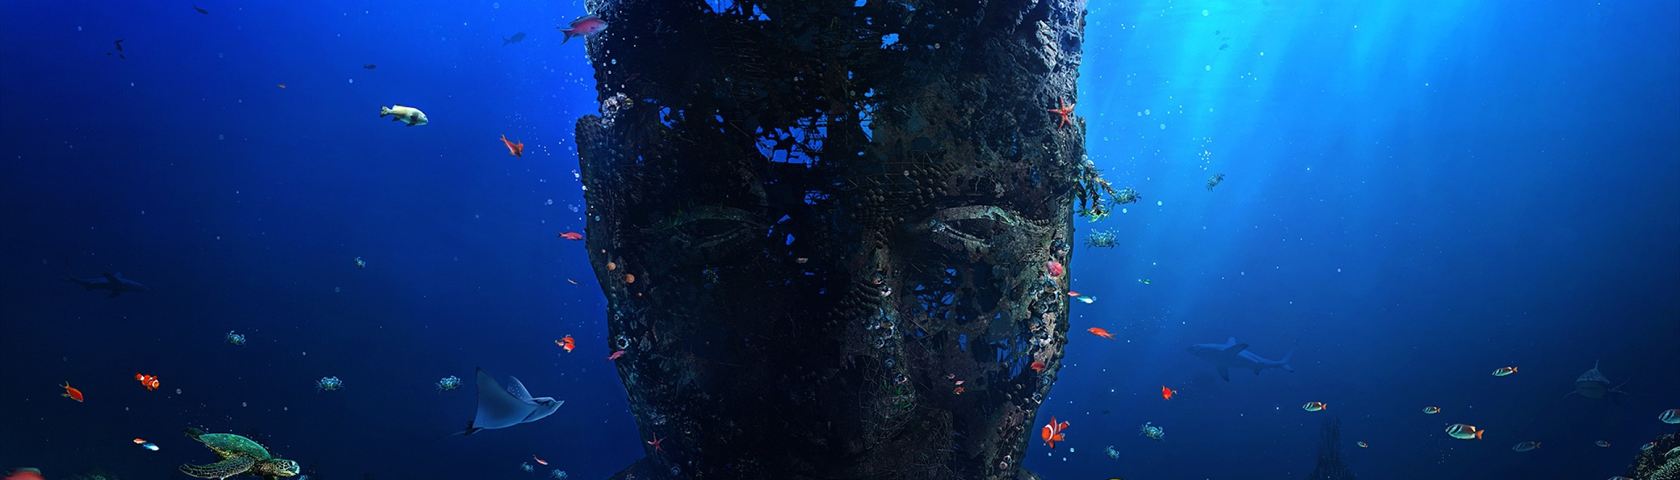 Underwater Face